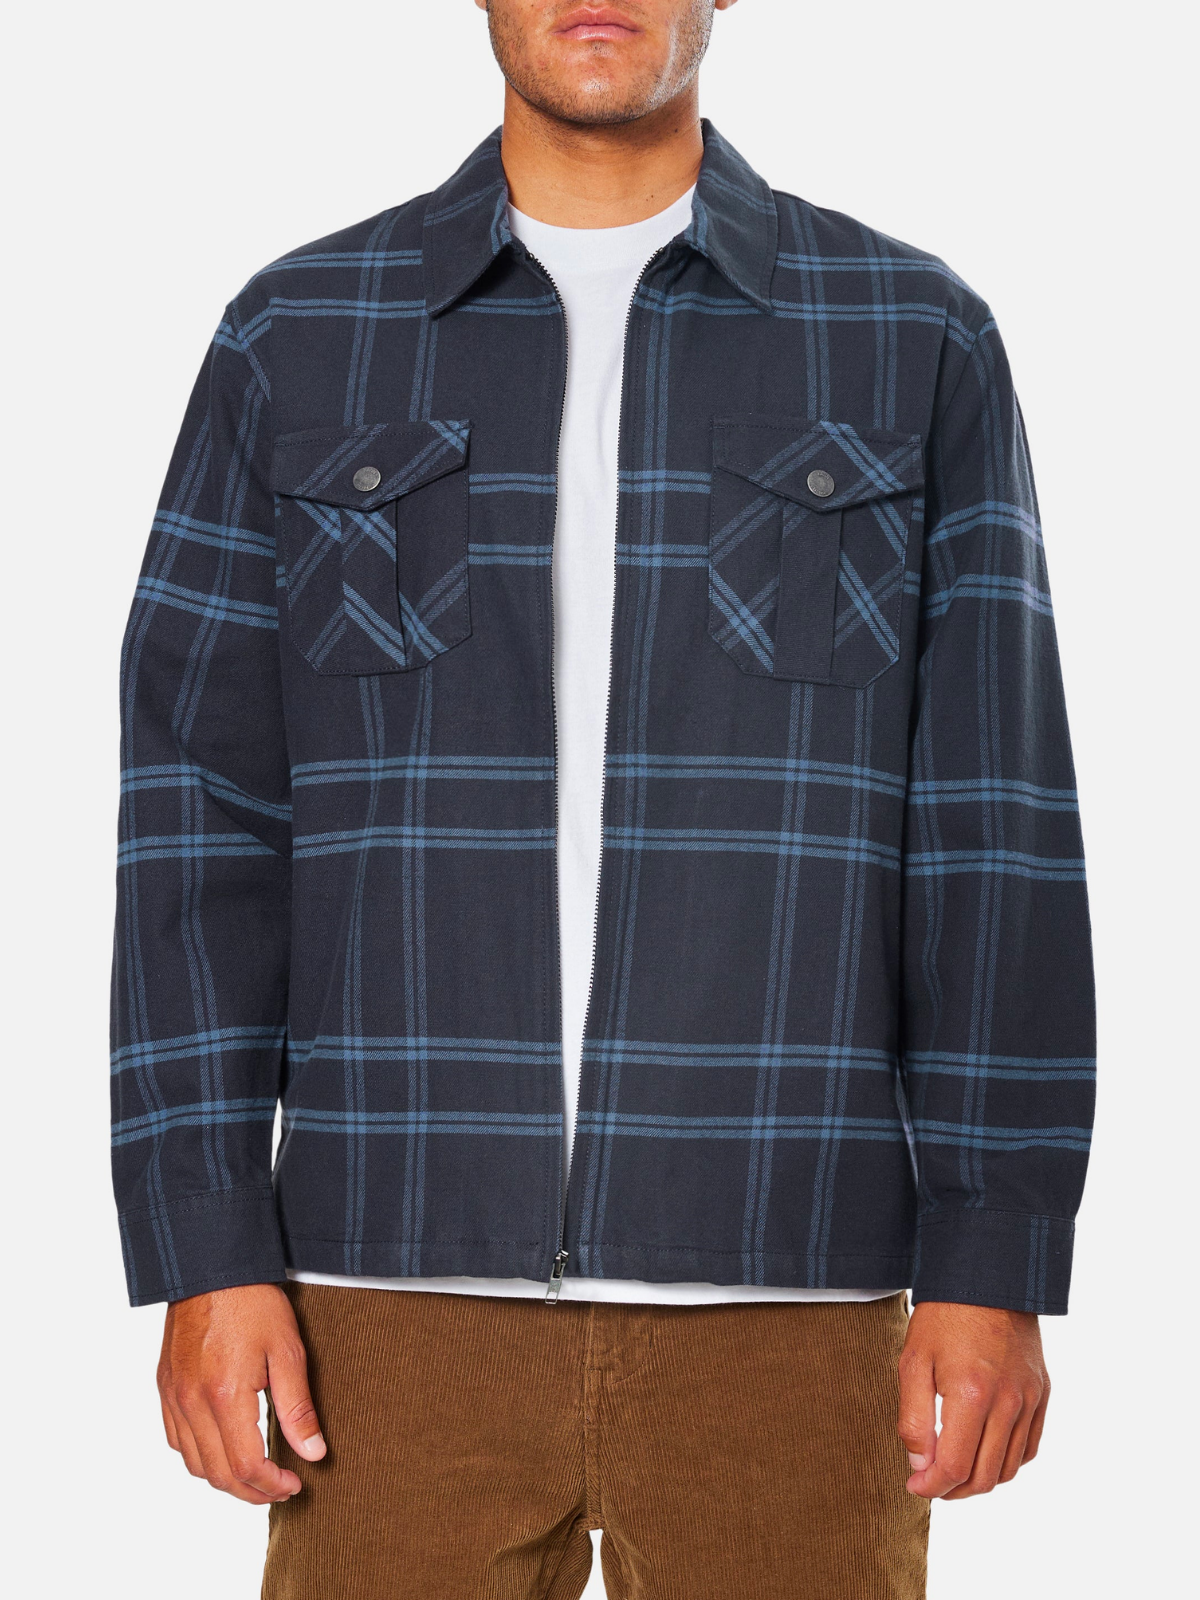 katin anderson flannel polar navy plaid cotton zip up jacket kempt athens ga georgia men's clothing store